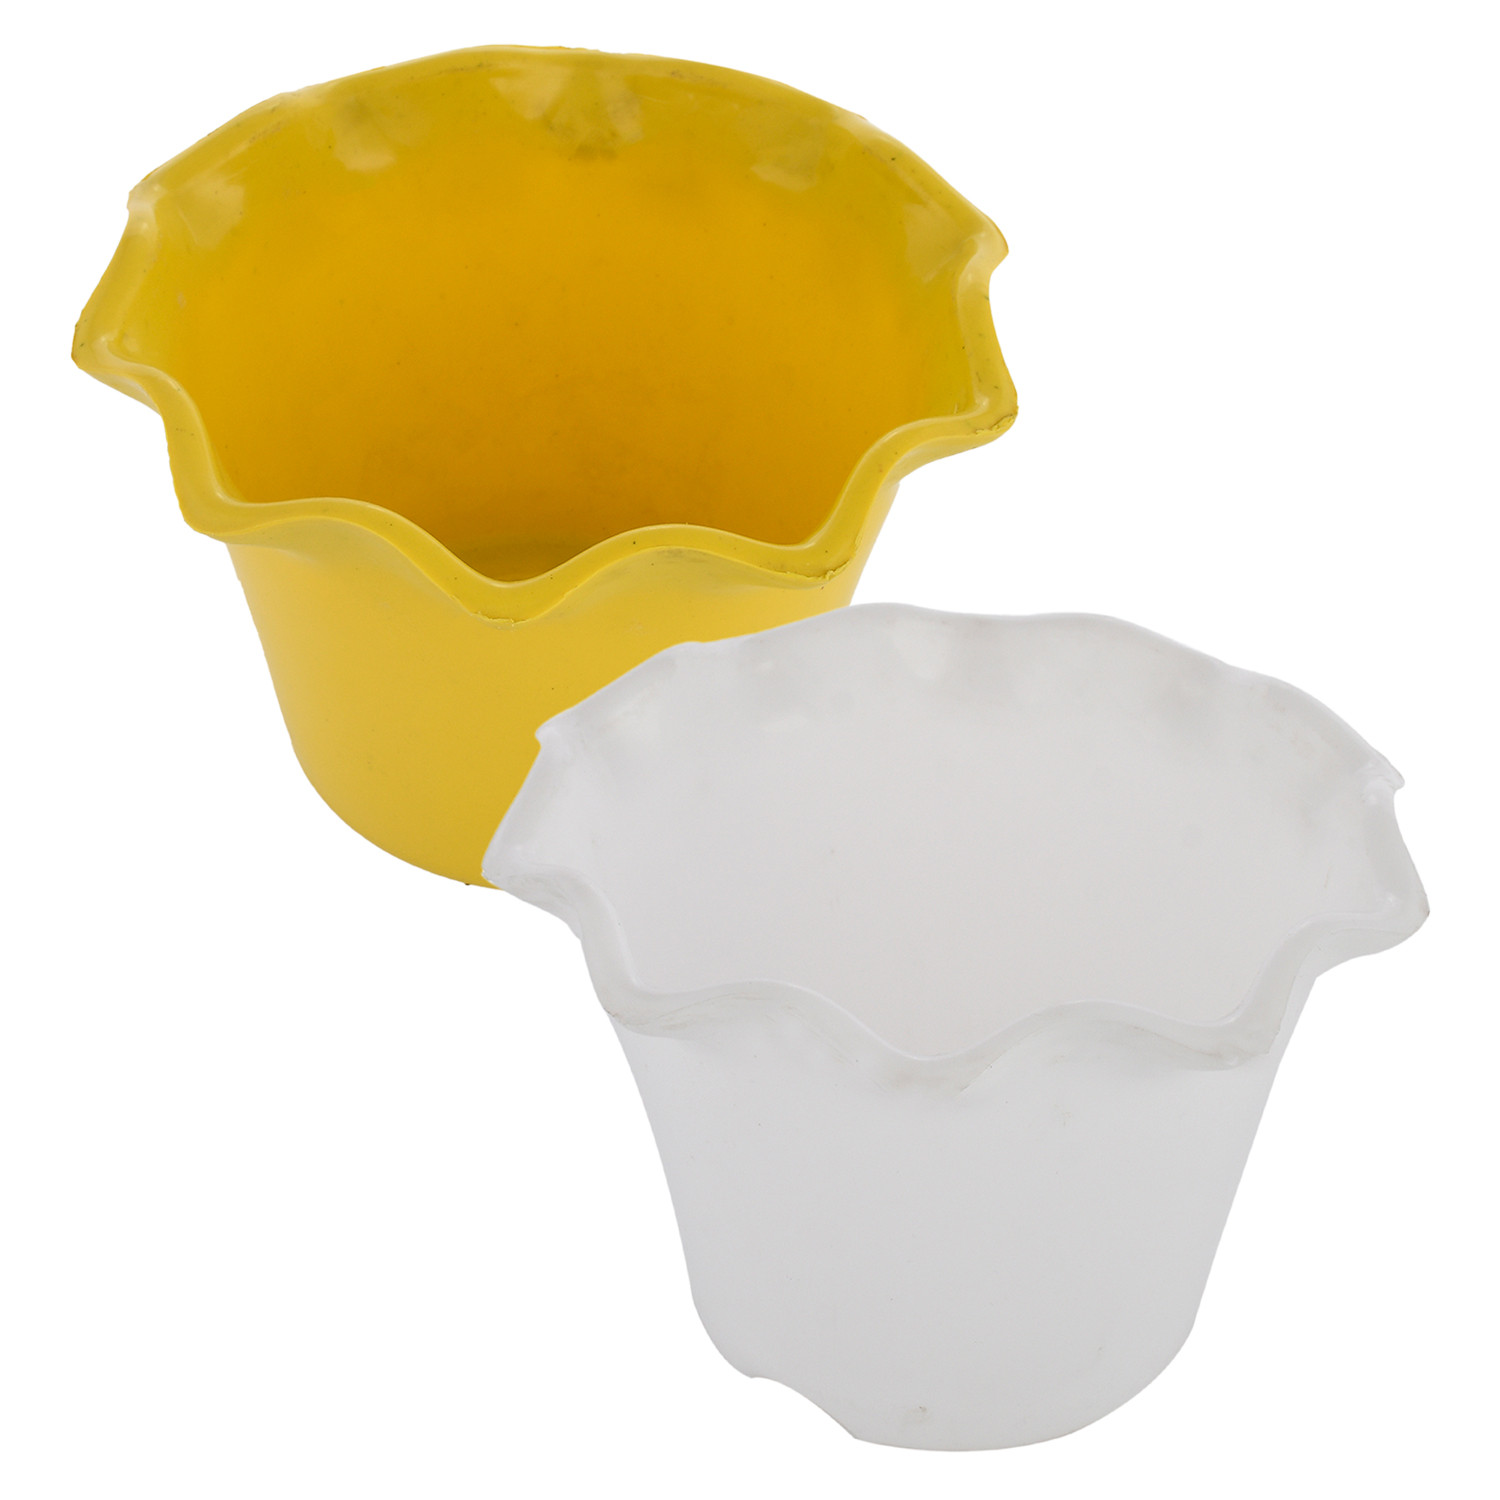 Kuber Industries Blossom Flower Pot|Durable Plastic Flower Pots|Planters for Home Décor|Garden|Living Room|Balcony|Pack of 2 (White & Yellow)